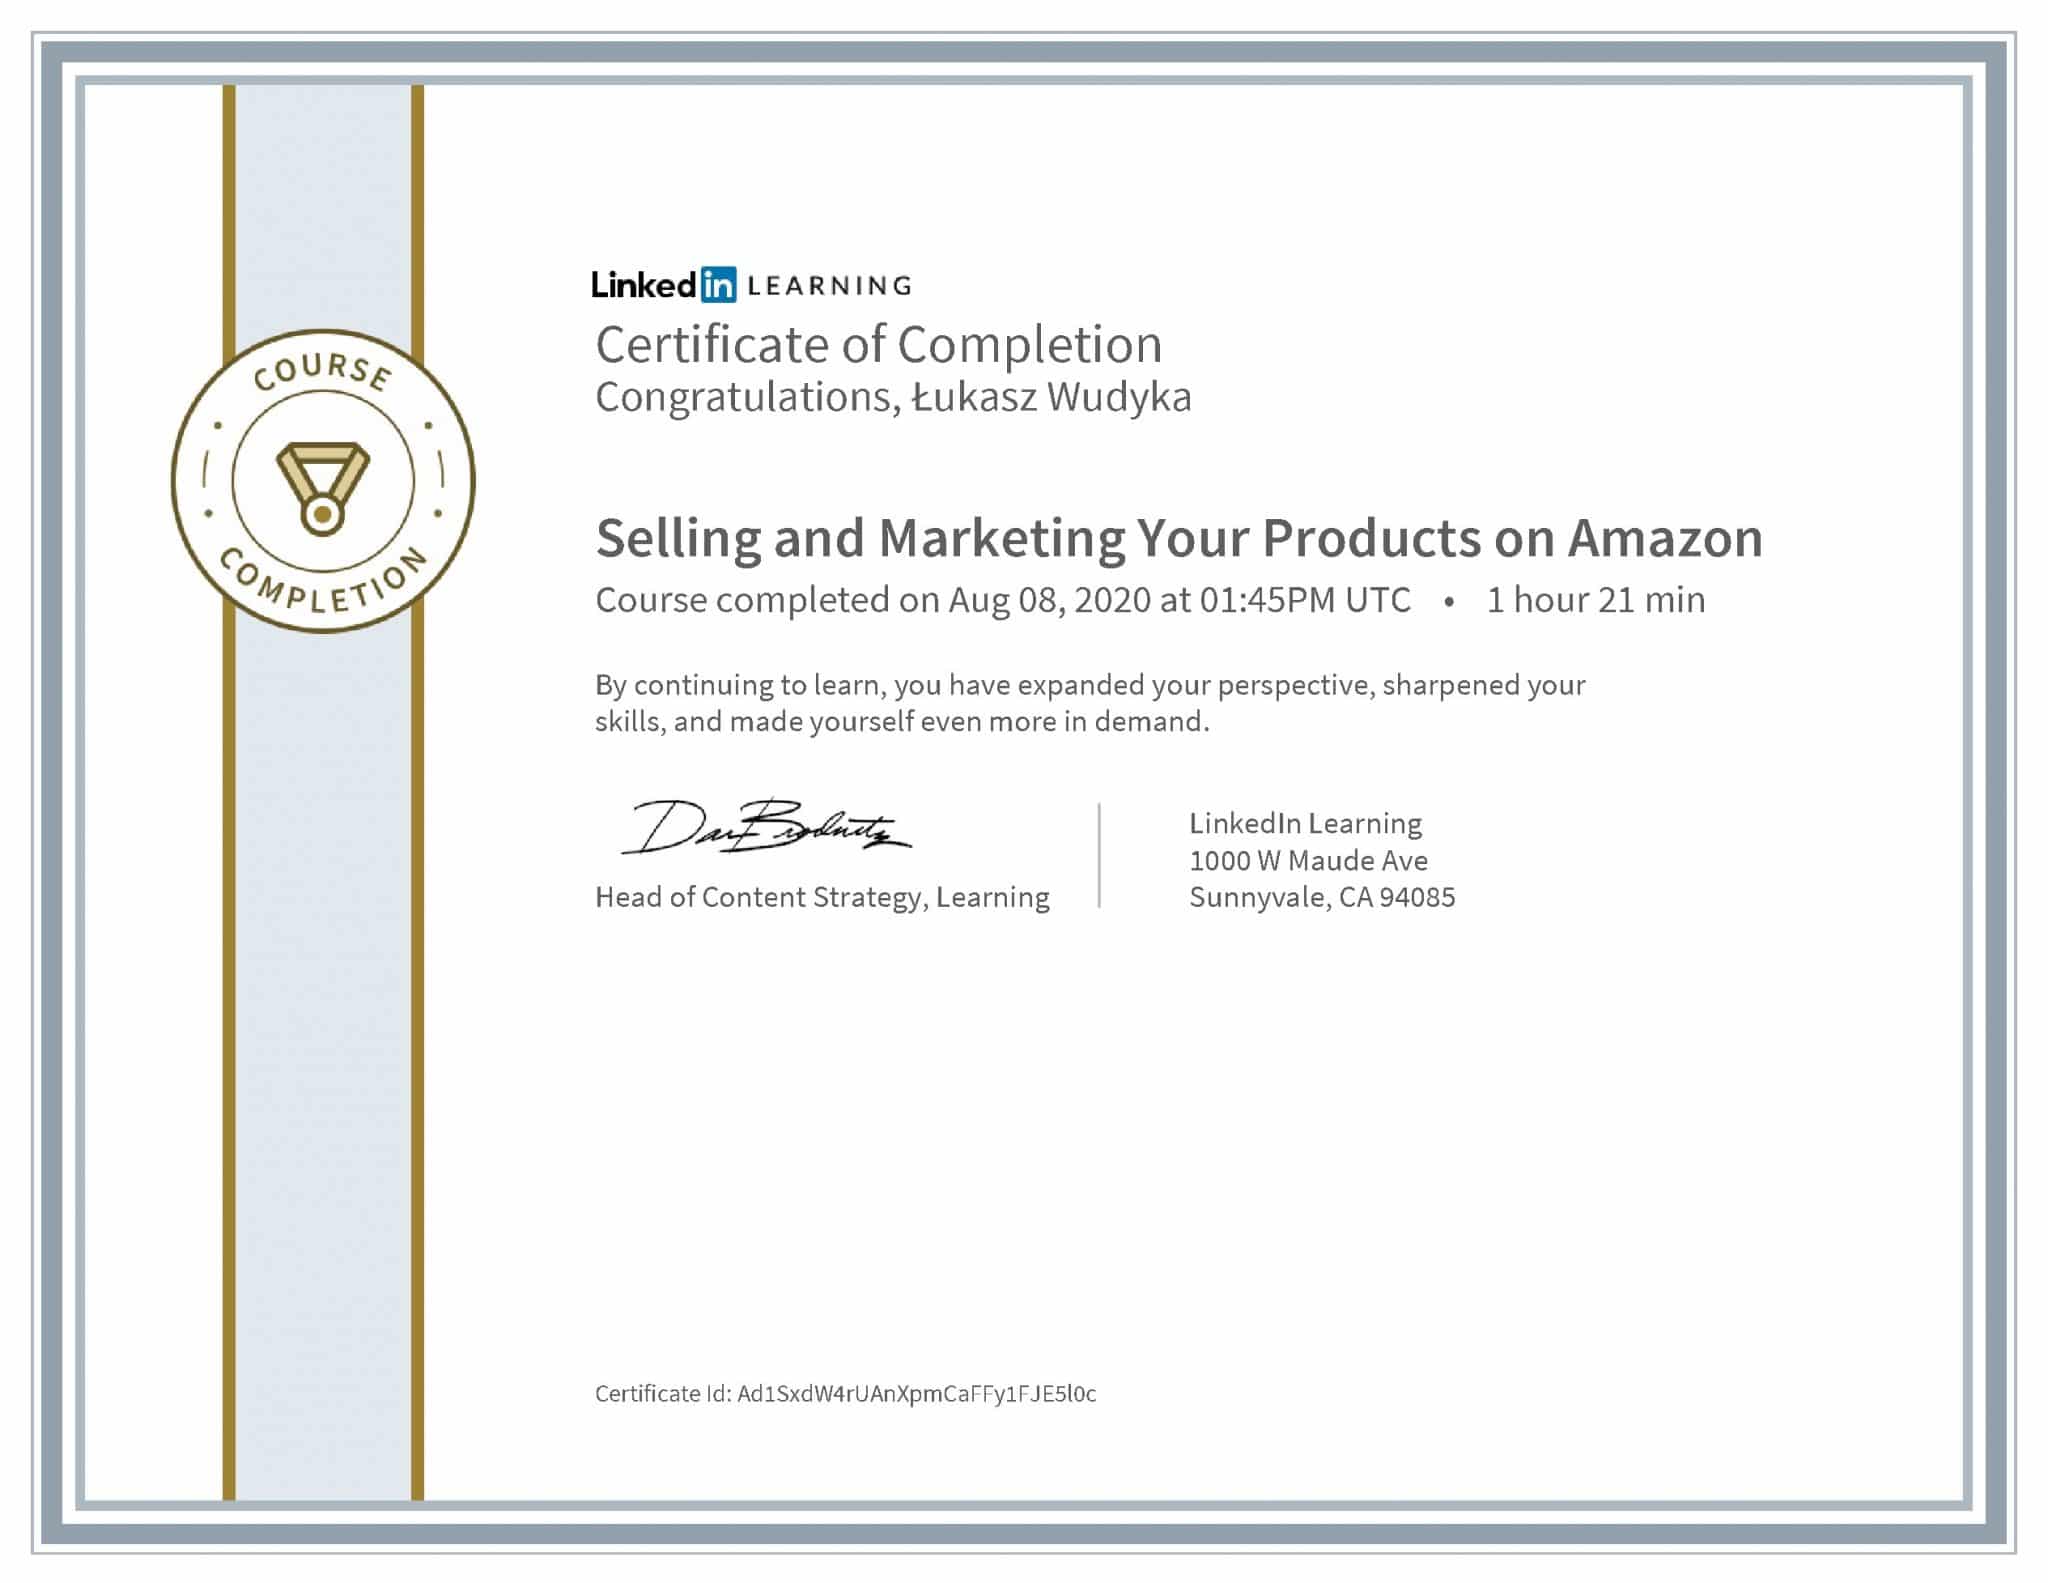 Łukasz Wudyka certyfikat LinkedIn Selling and Marketing Your Products on Amazon